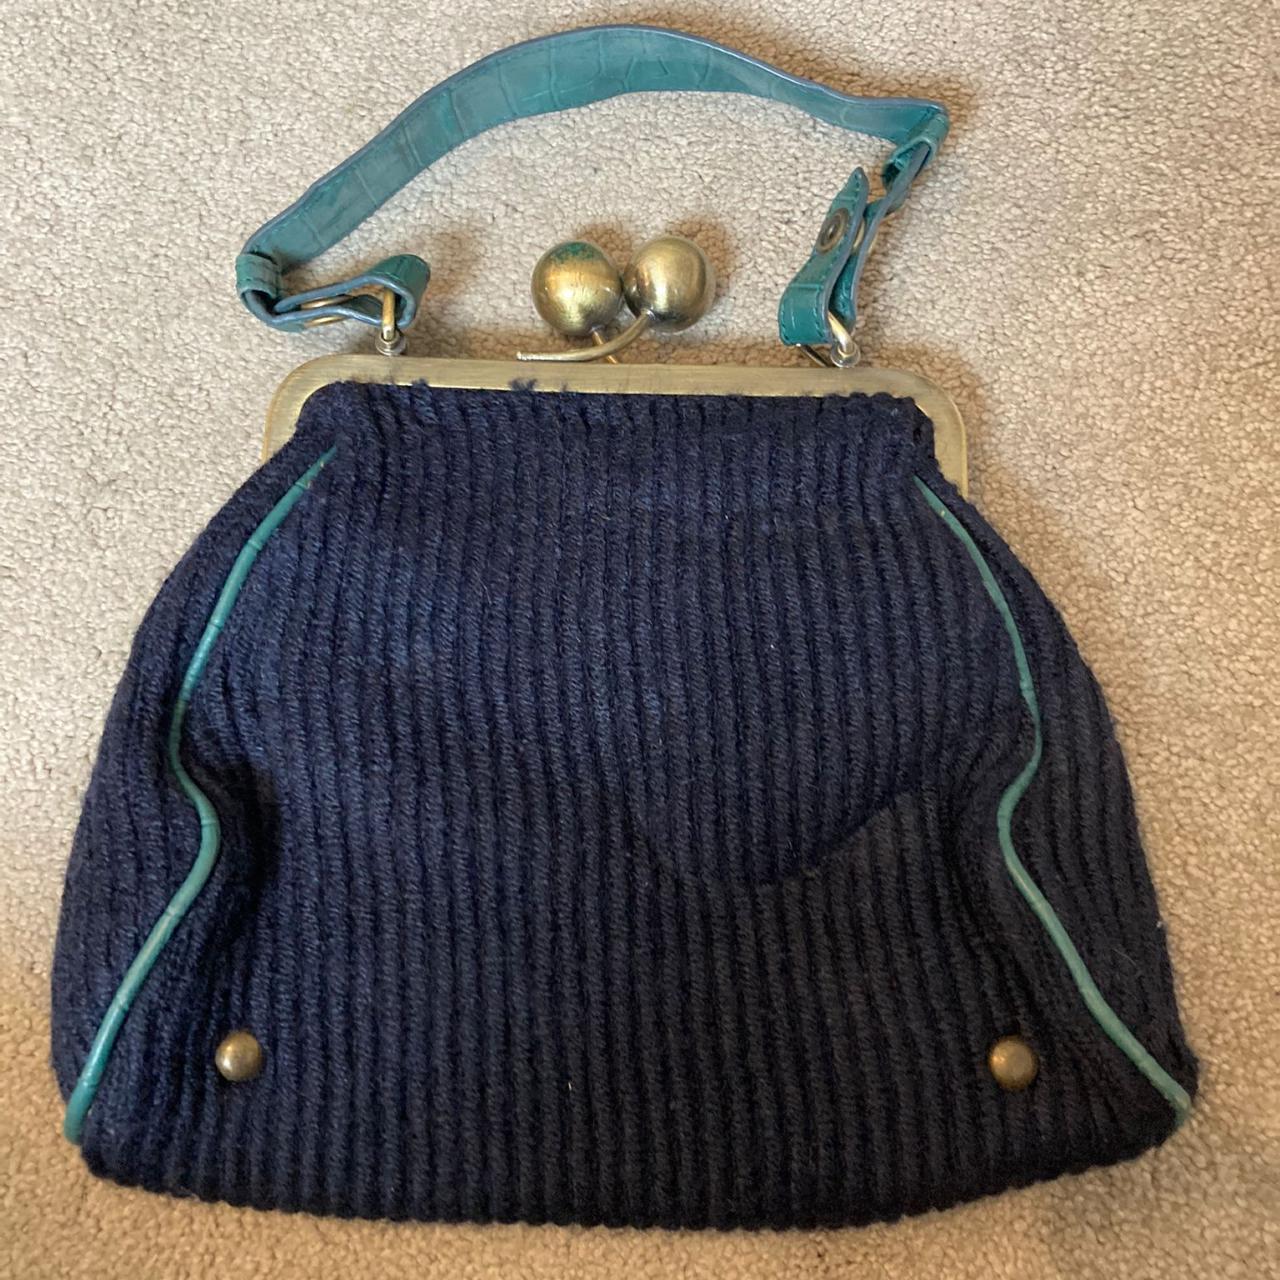 Product Image 2 - KG navy cord purse bag.
Slight